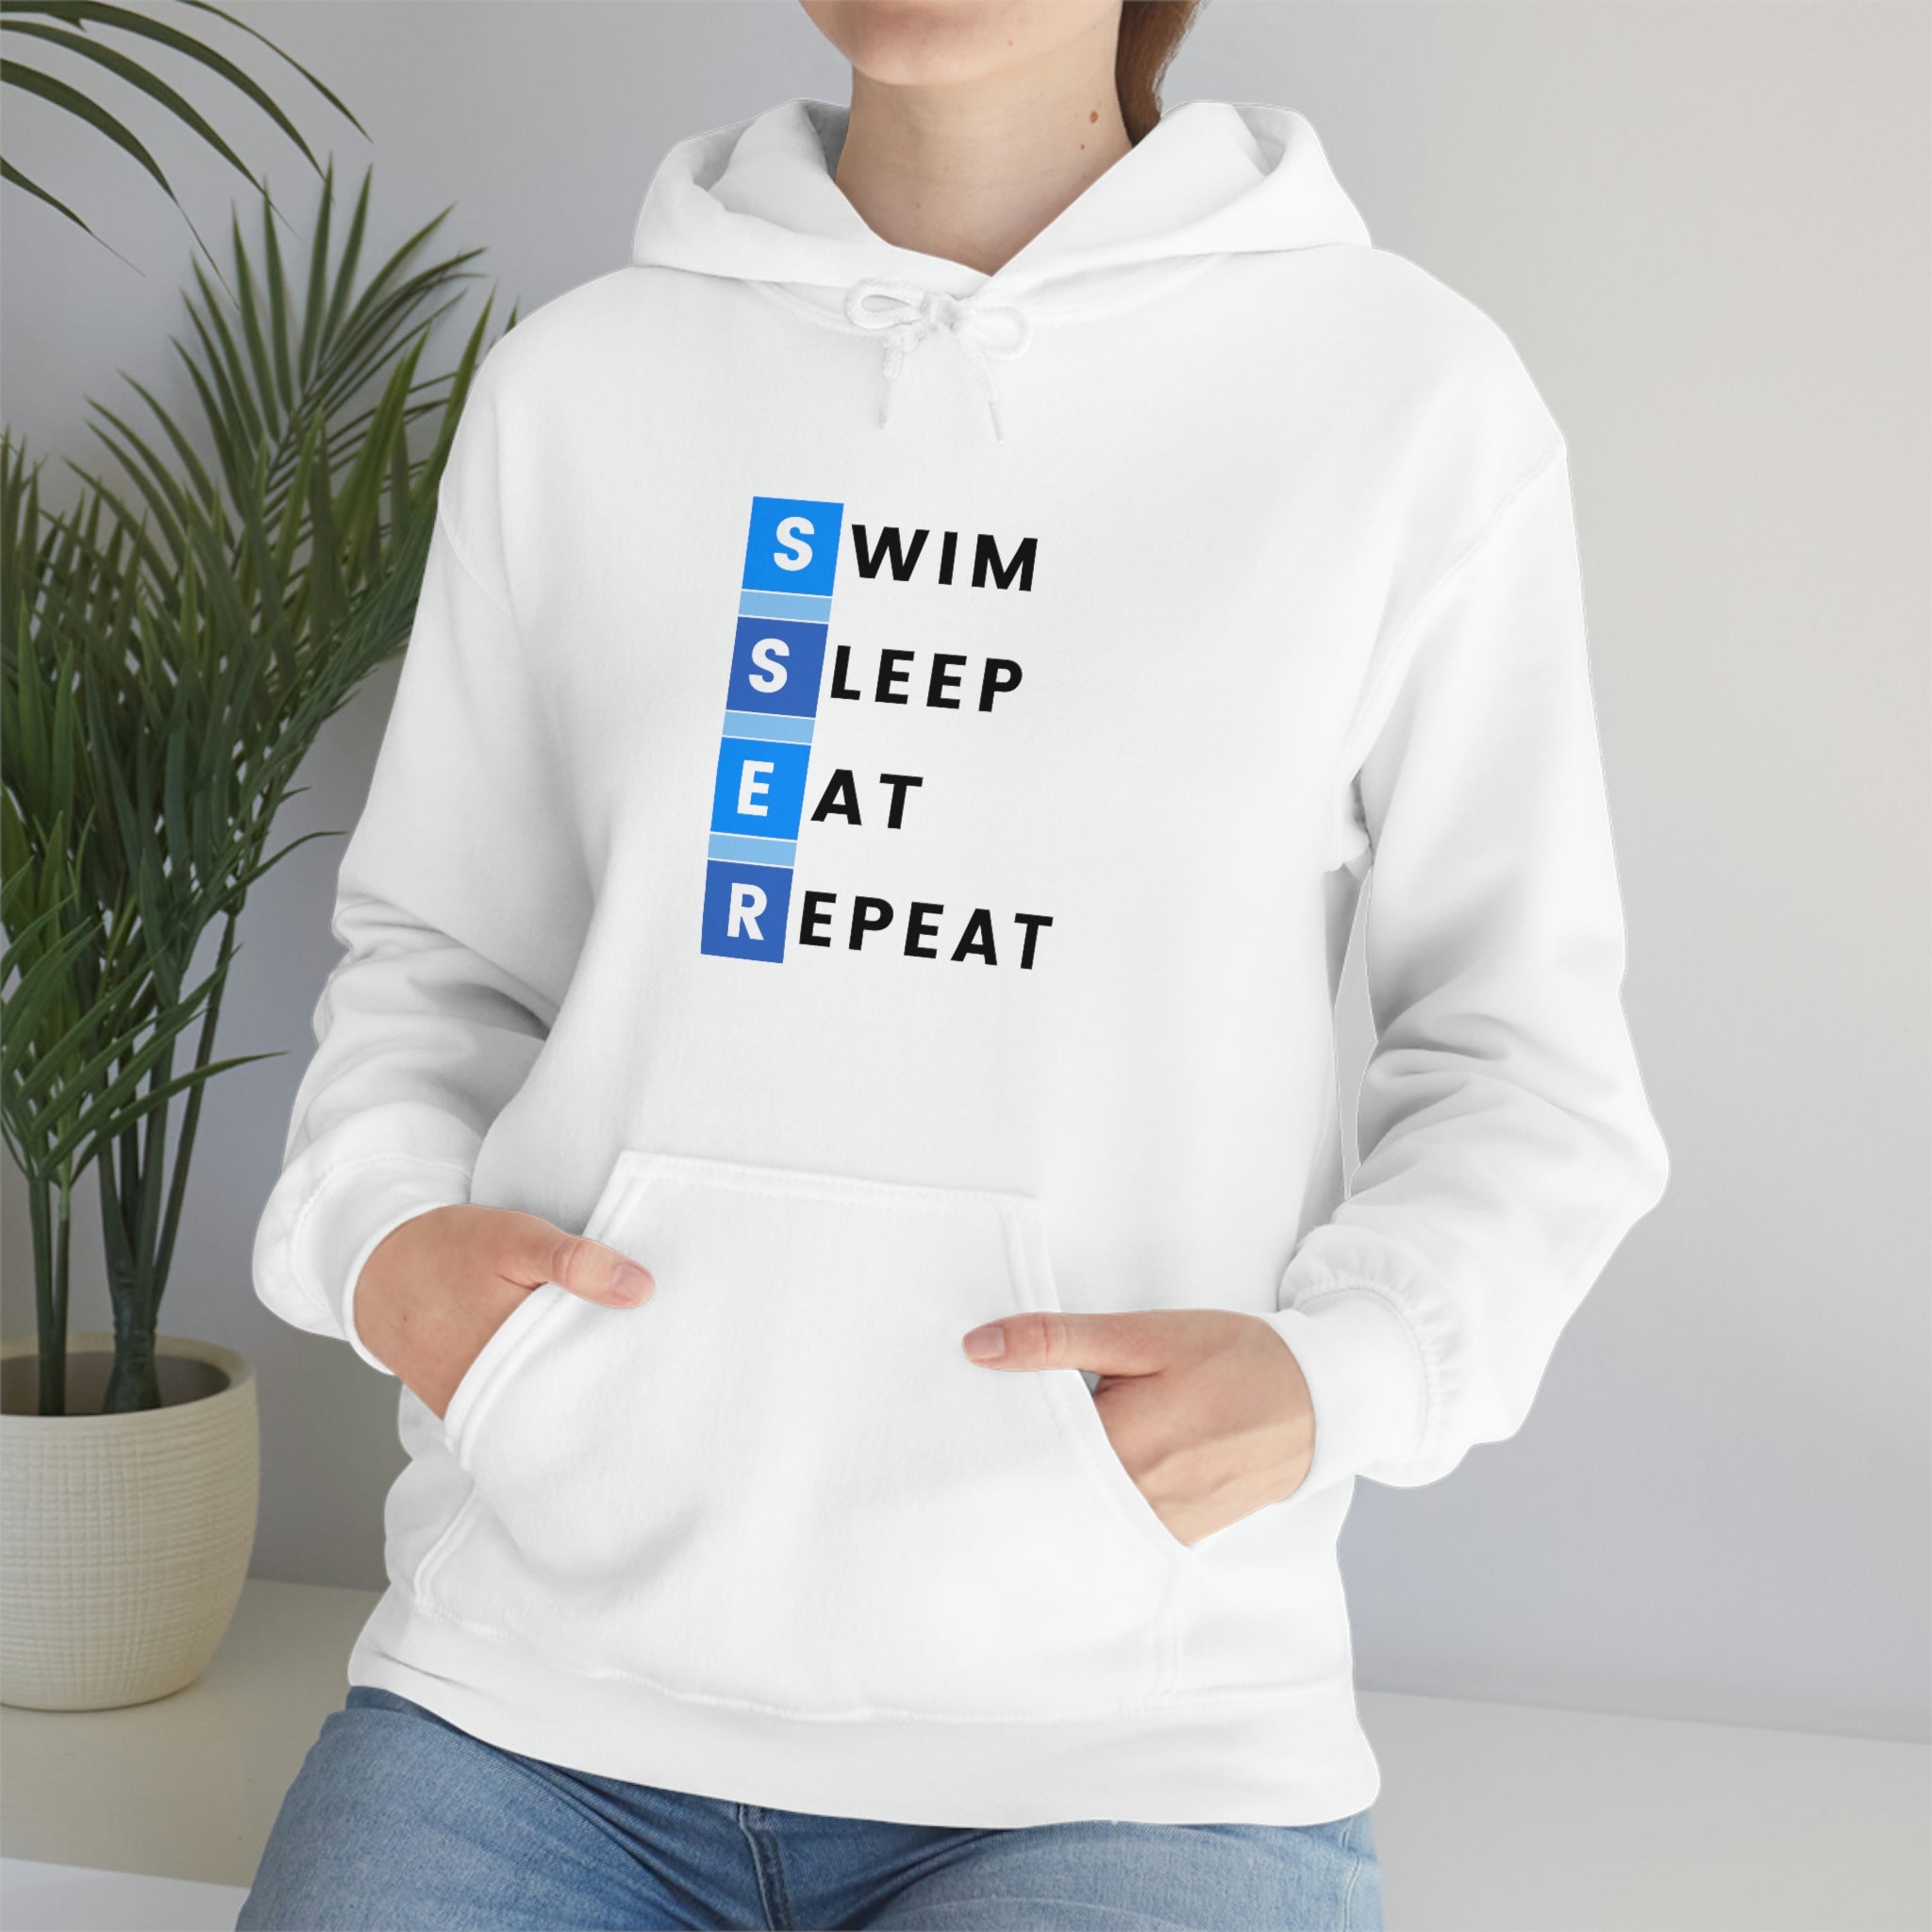 Swim, Sleep, Eat, Repeat Hooded Sweatshirt